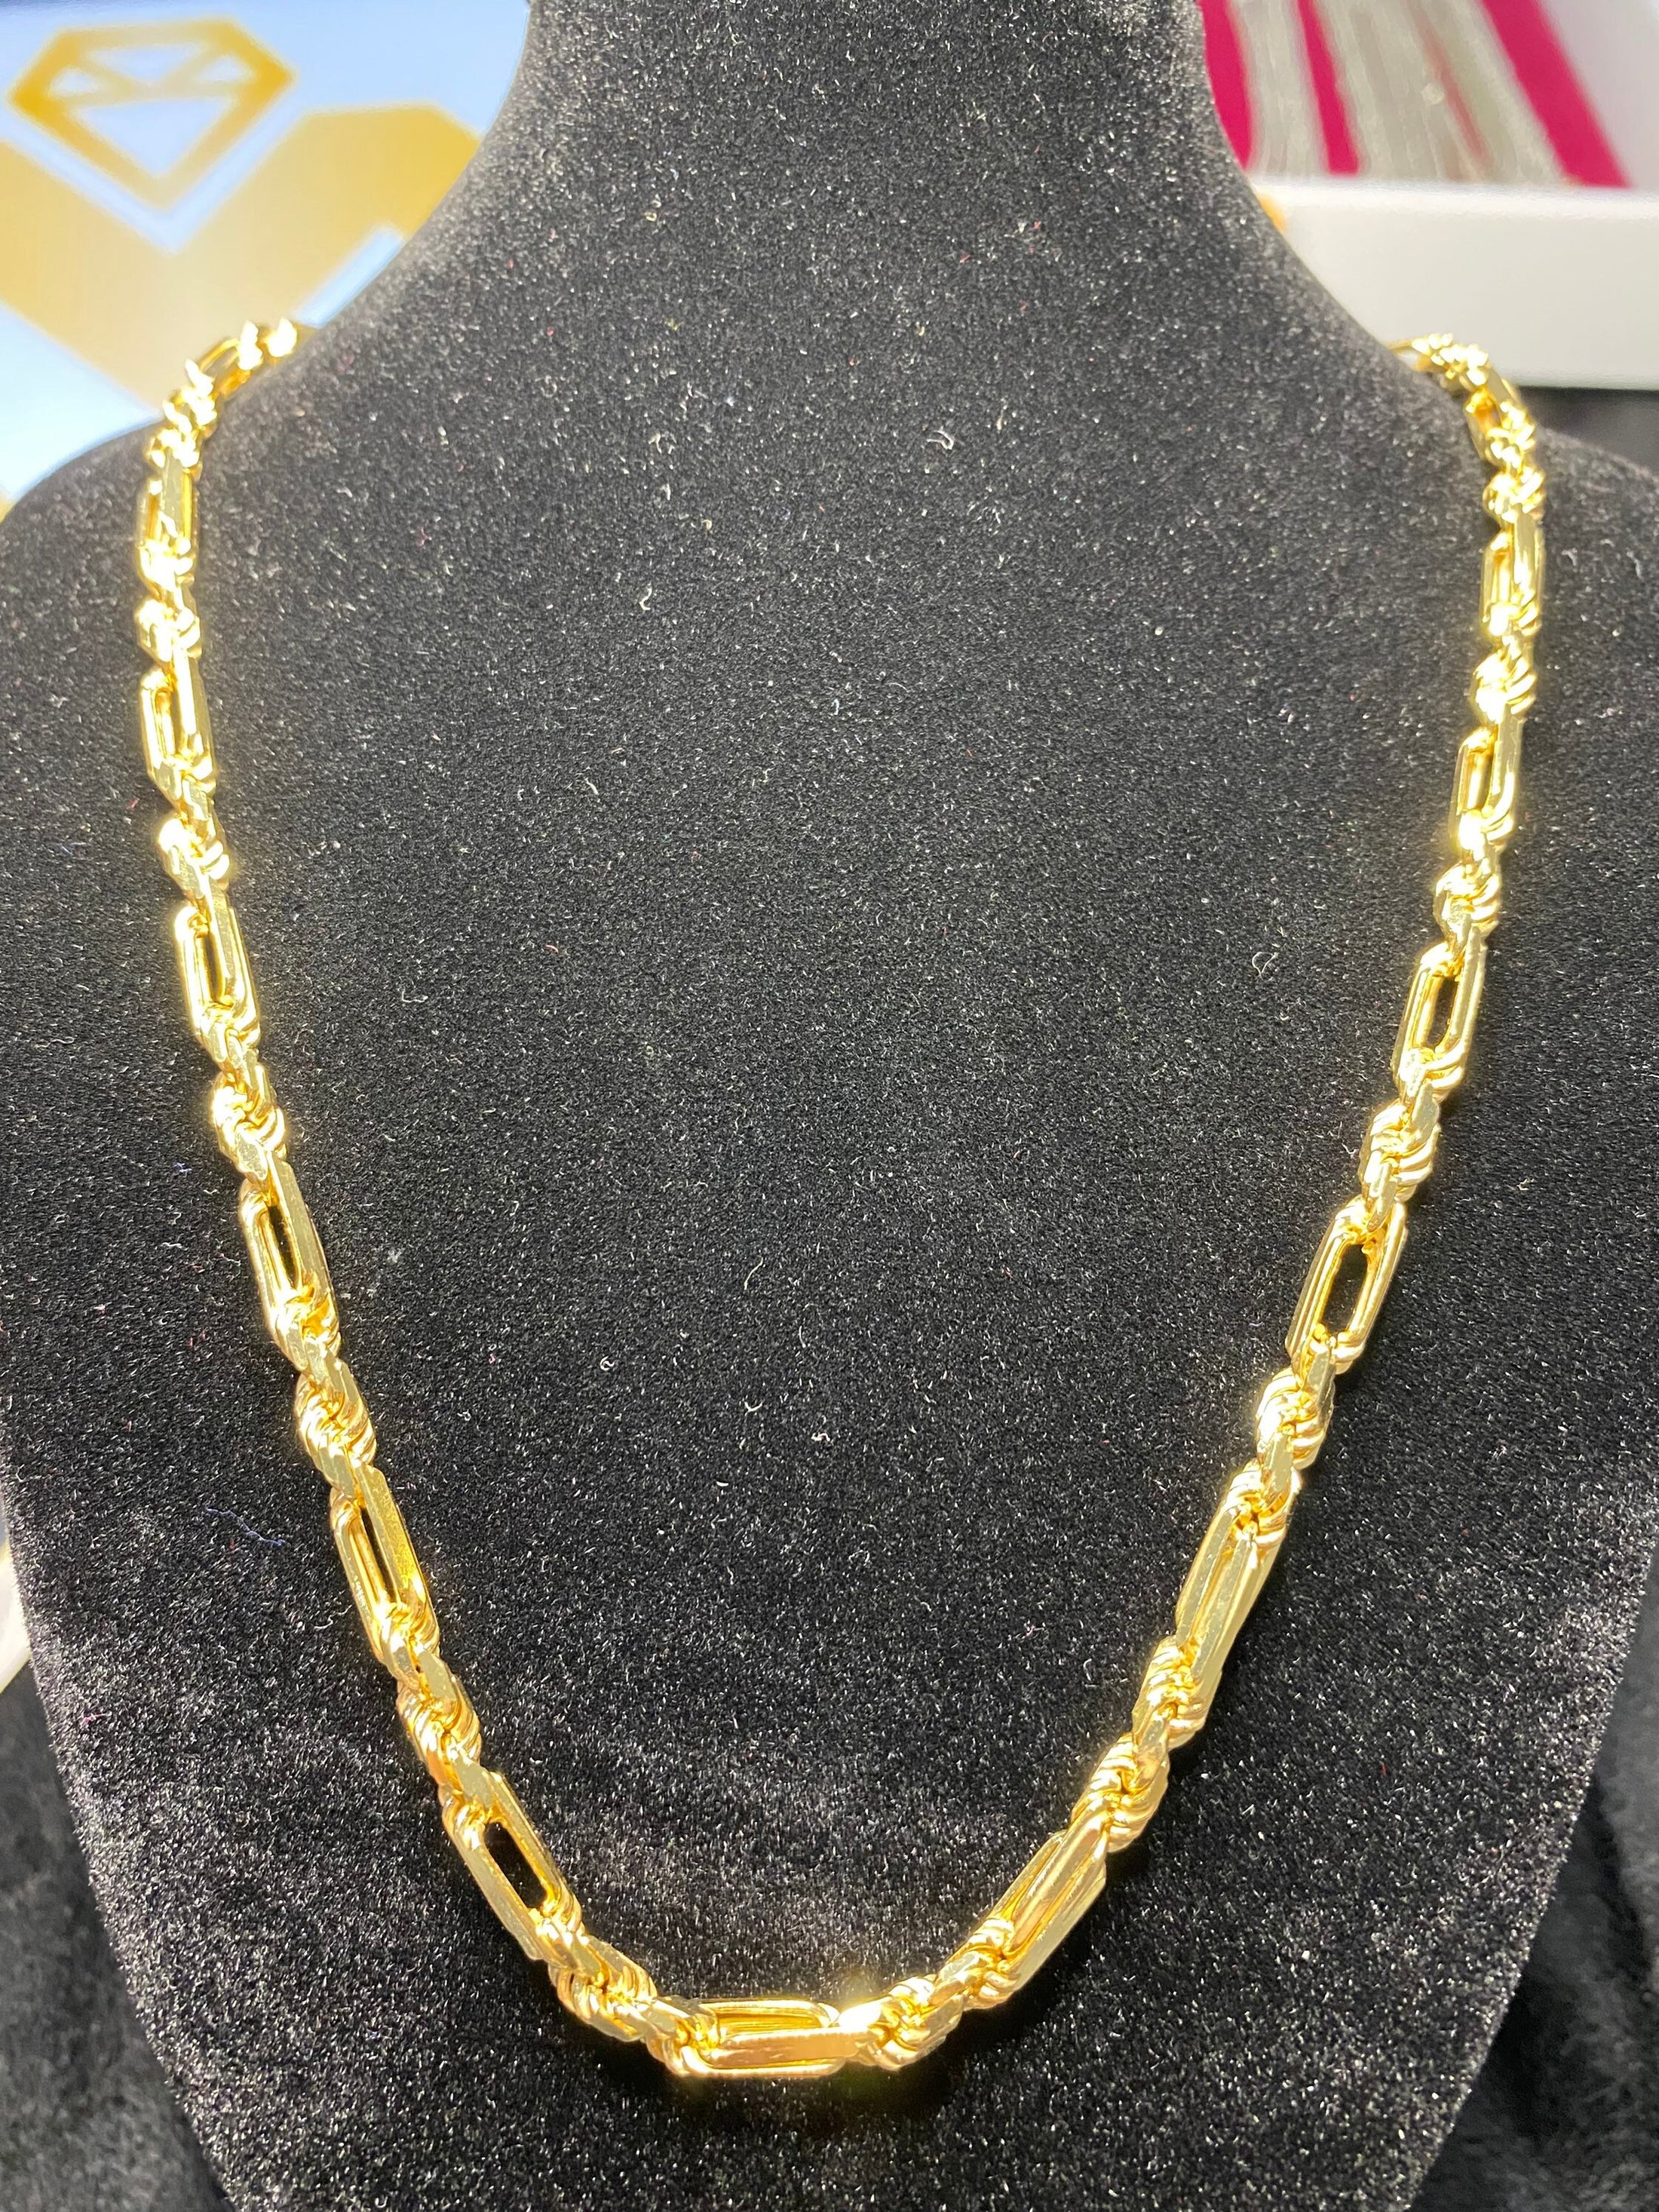 10k Yellow Gold Vermeil Mens Diamond Cut Link Chain Rare Design Wear it as a chain bracelet gift for Him on birthdays anniversary grad gift